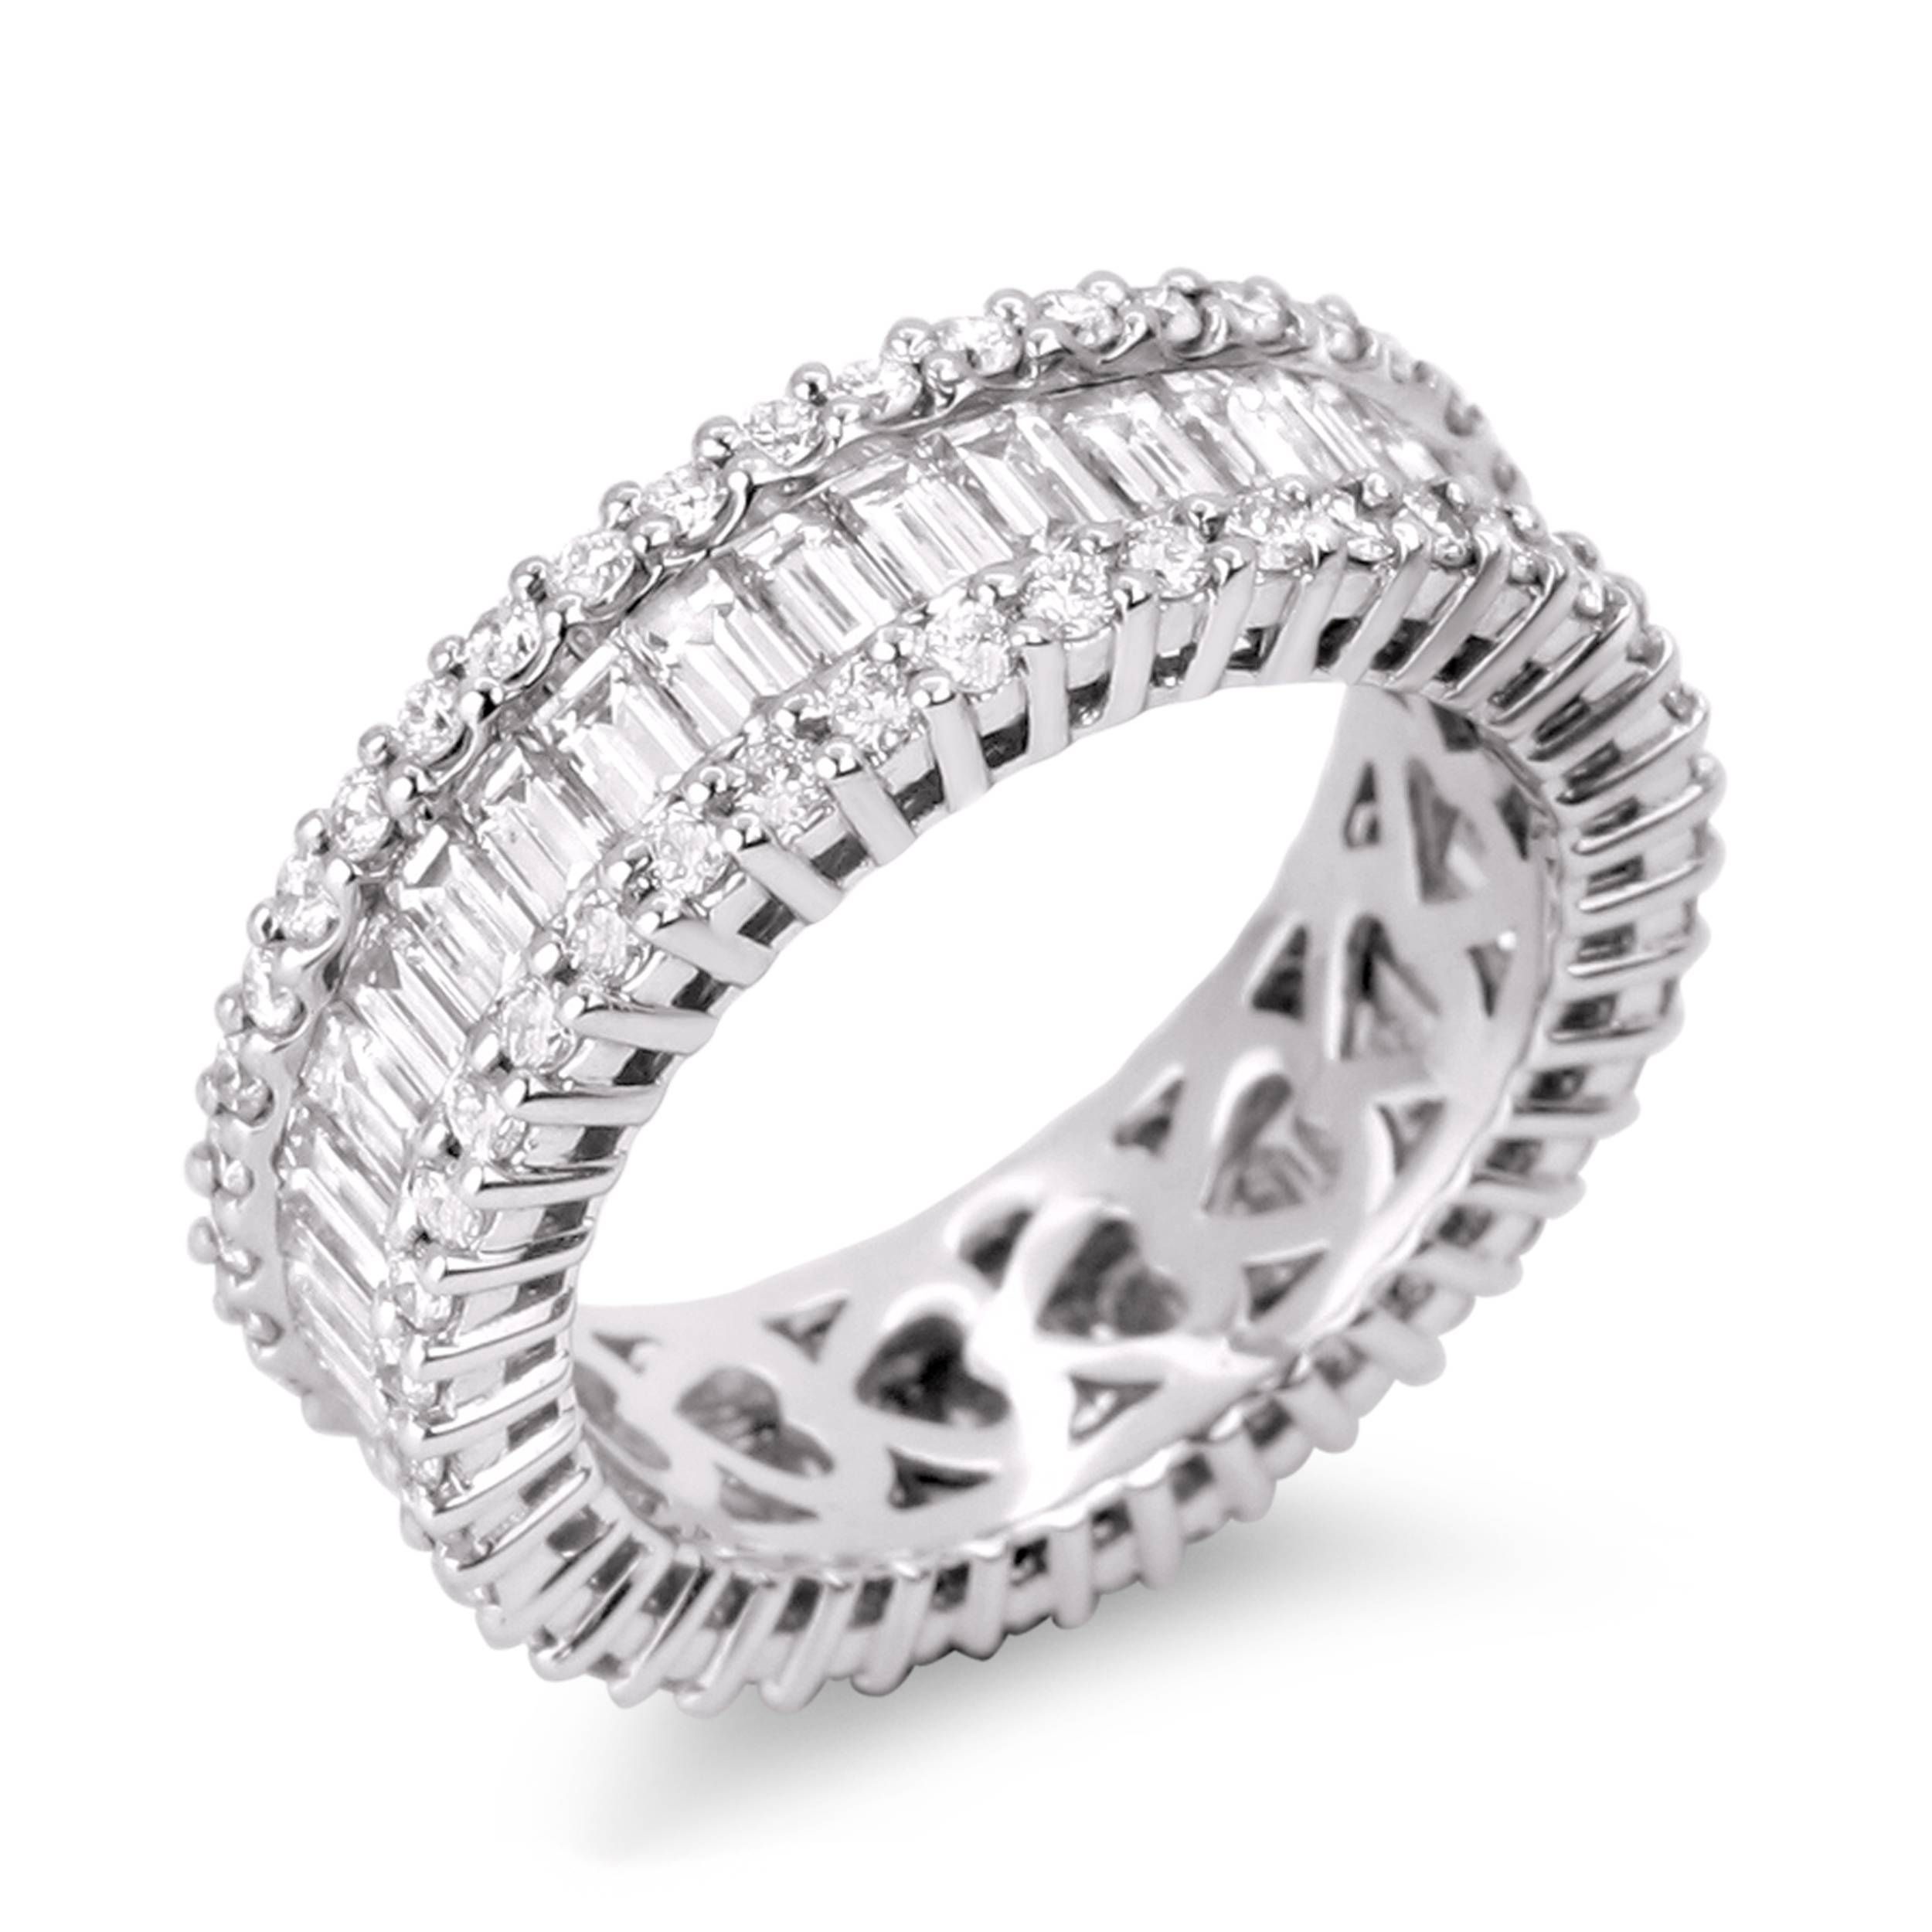 Wedding Anniversary Rings Diamonds | Wedding Ideas Regarding Best And Newest Diamonds Wedding Anniversary Rings (View 19 of 25)